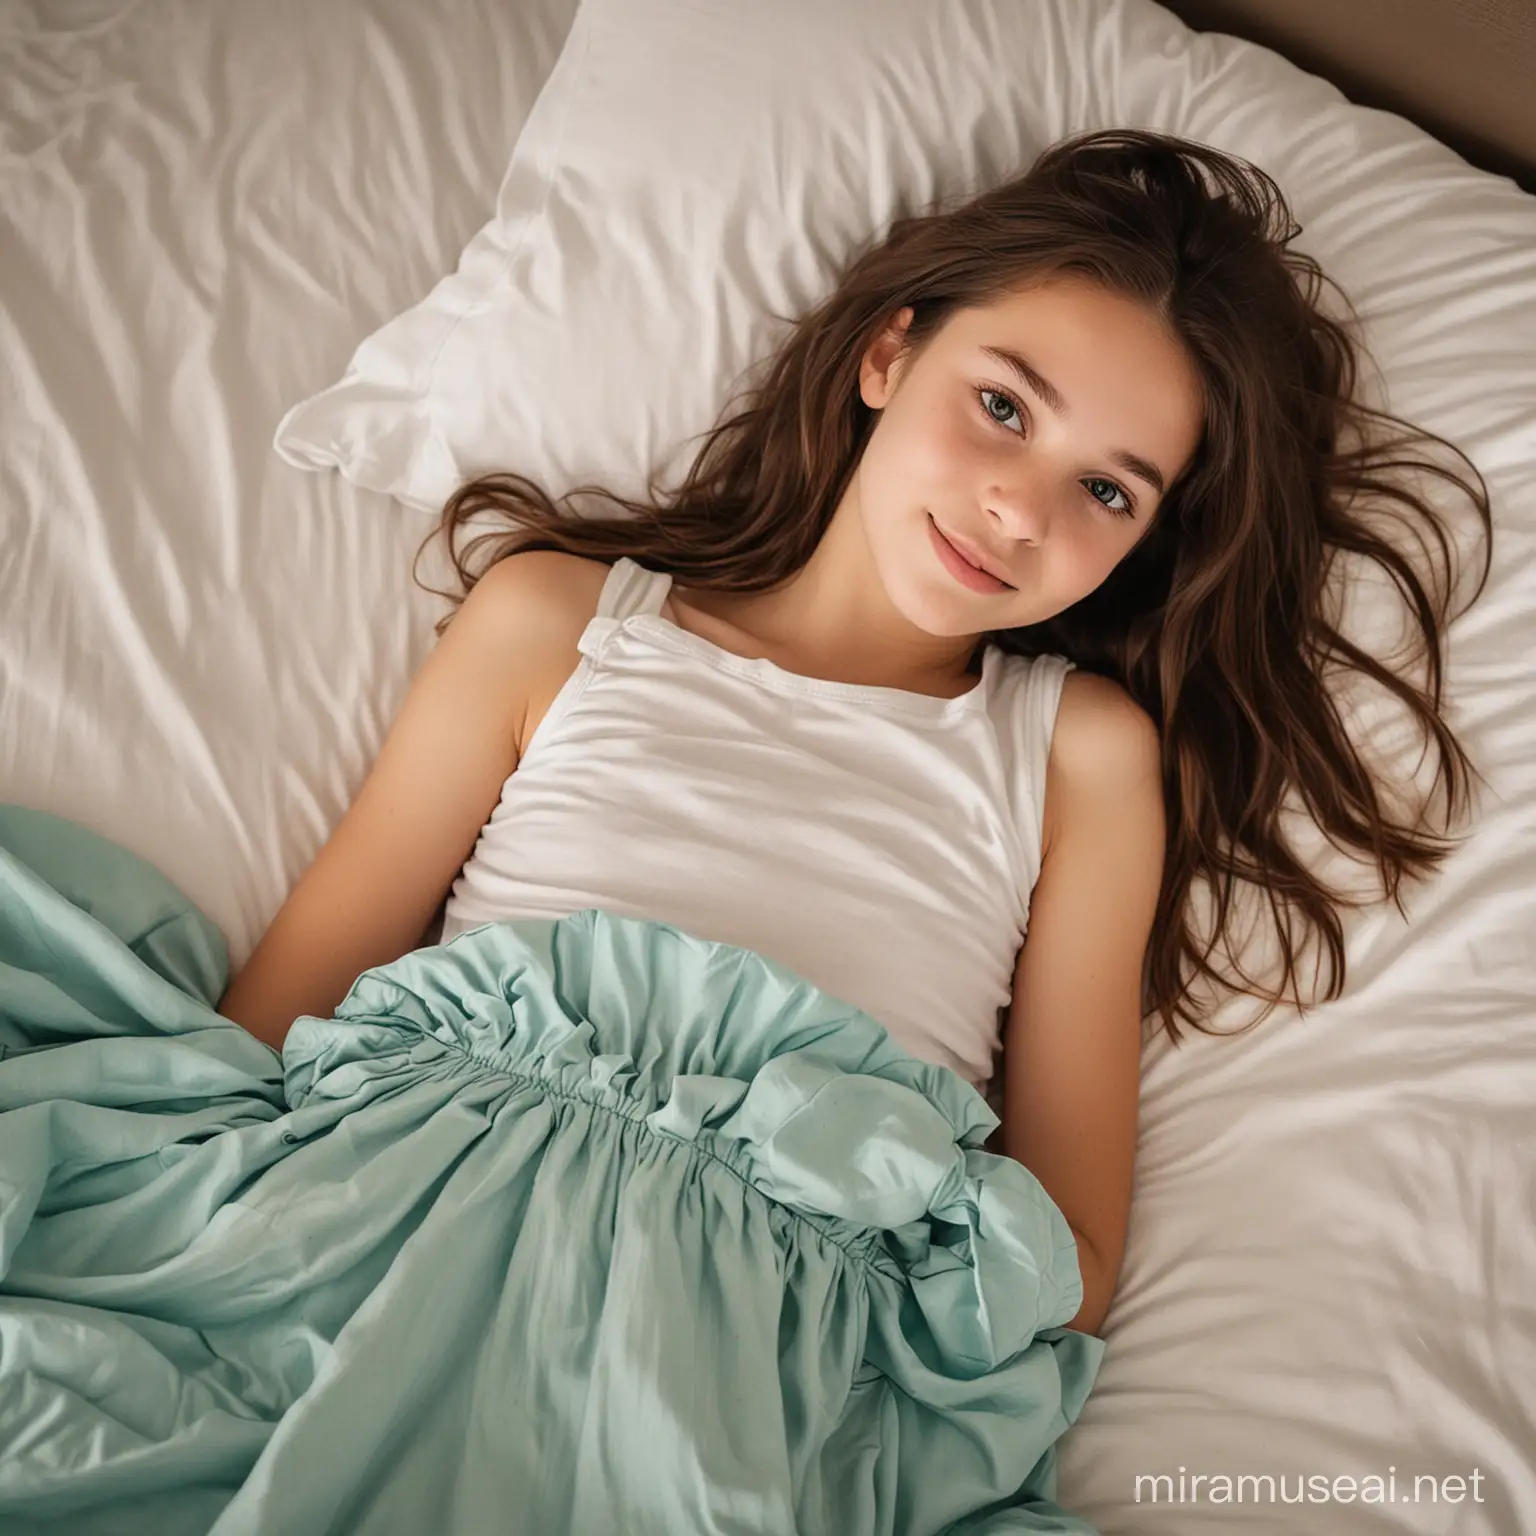 Teenage Girl Relaxing on Bed in Sunlit Room